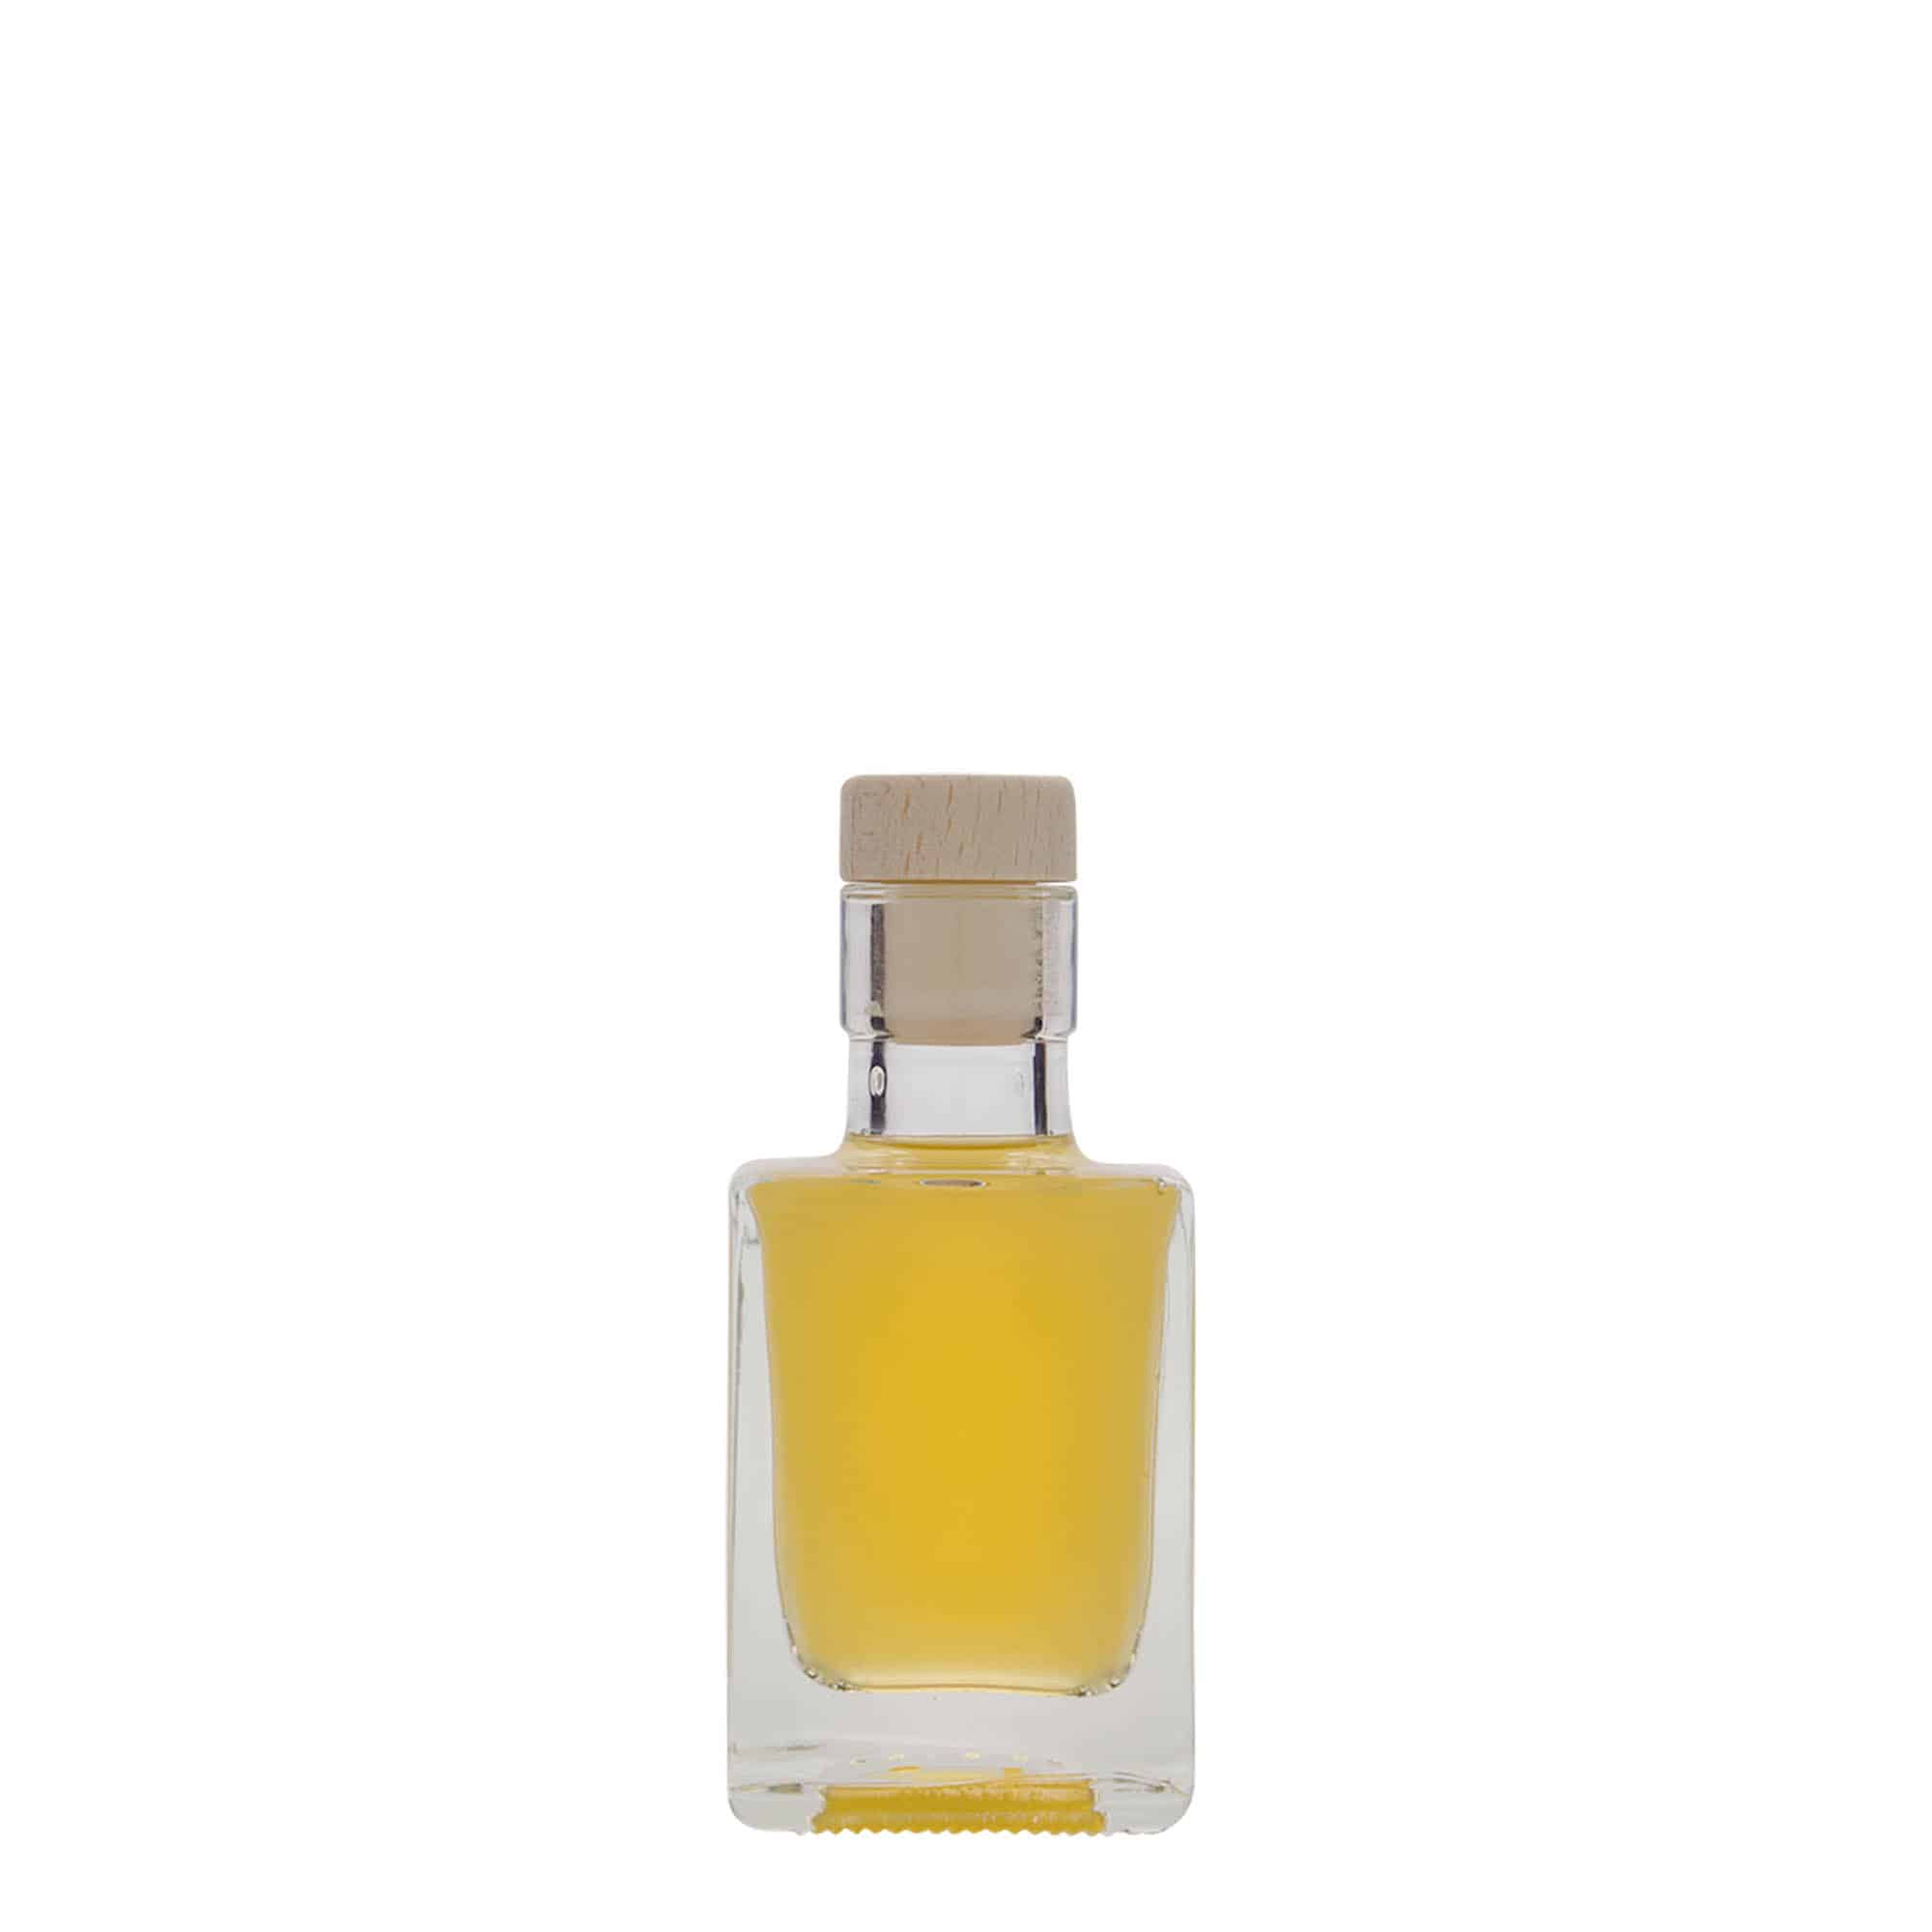 50 ml glass bottle 'Cube', square, closure: cork